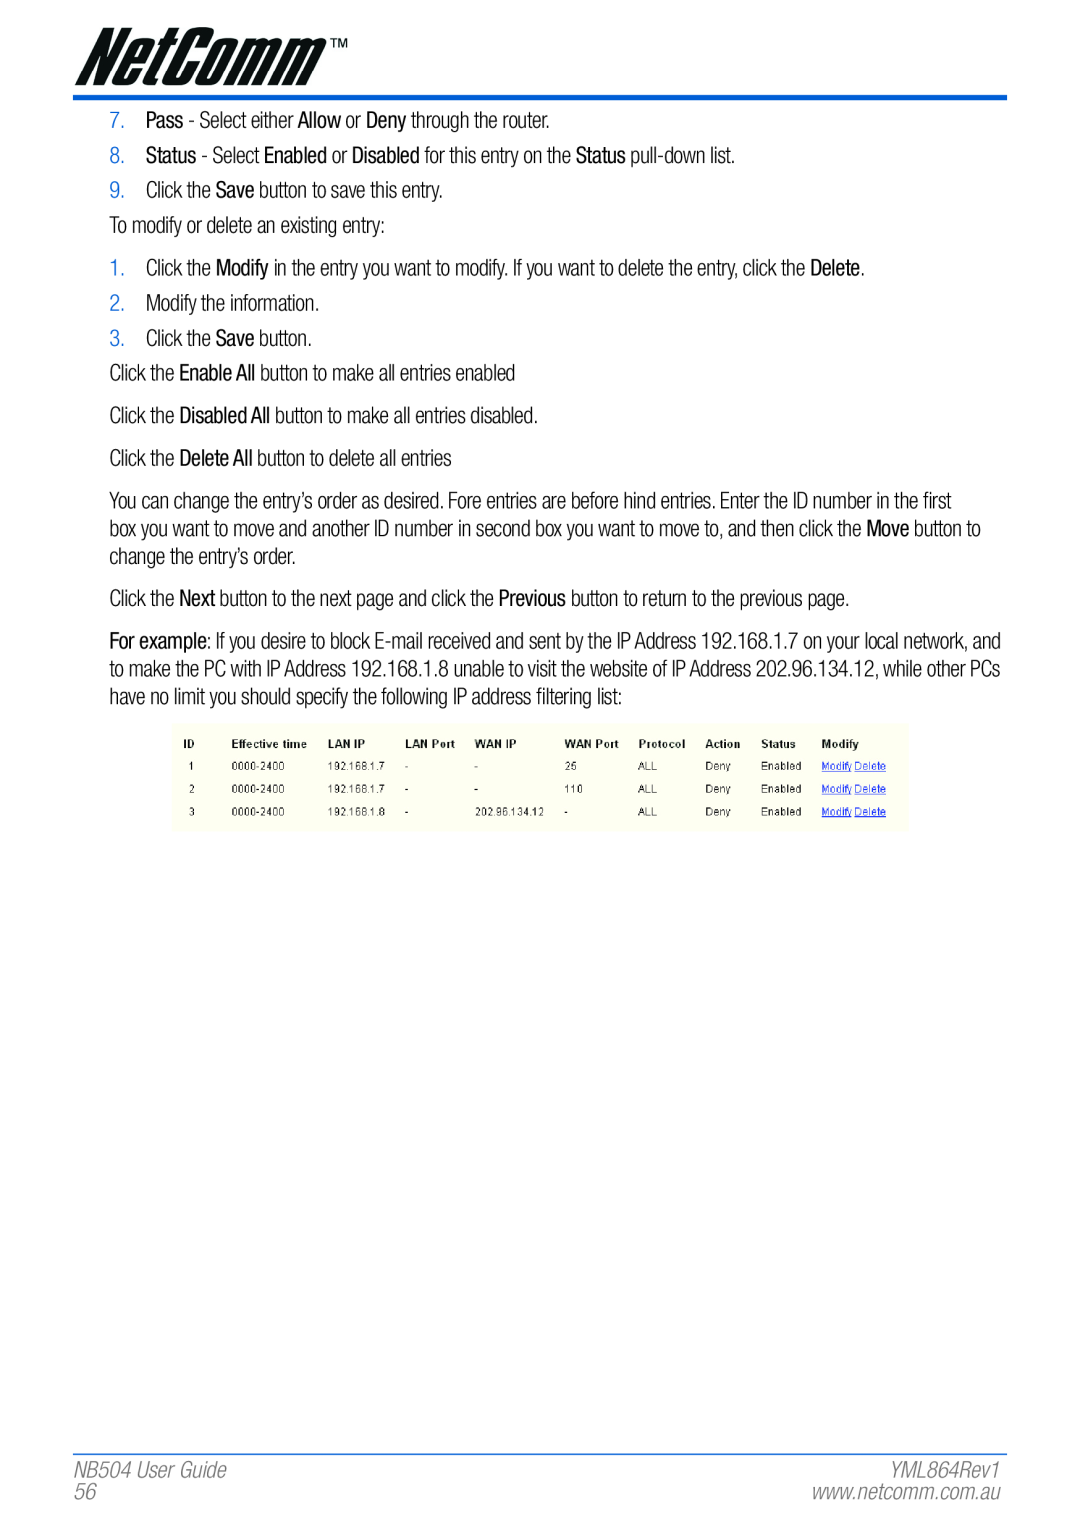 NetComm manual NB504 User Guide 